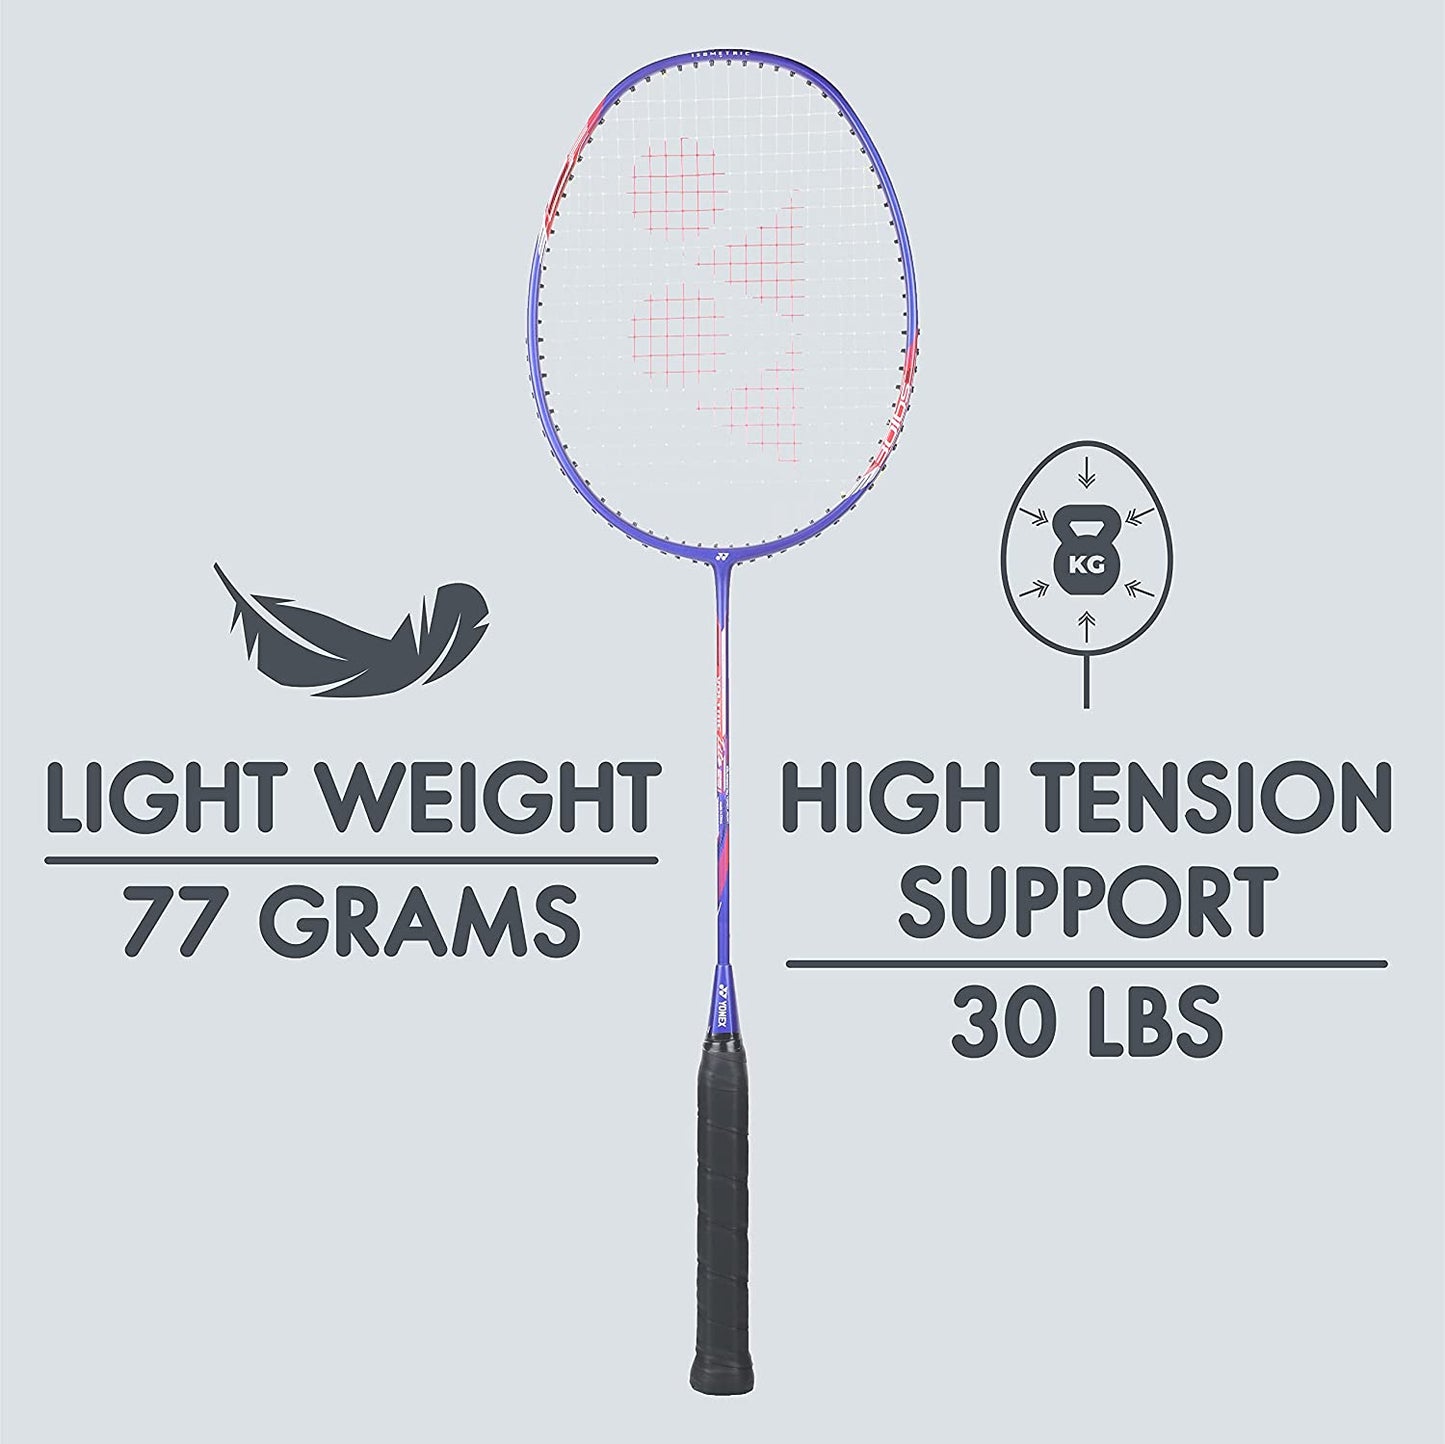 Yonex Voltric 25I Strung Badminton Racquet, 5U/G5 - Blue - Best Price online Prokicksports.com